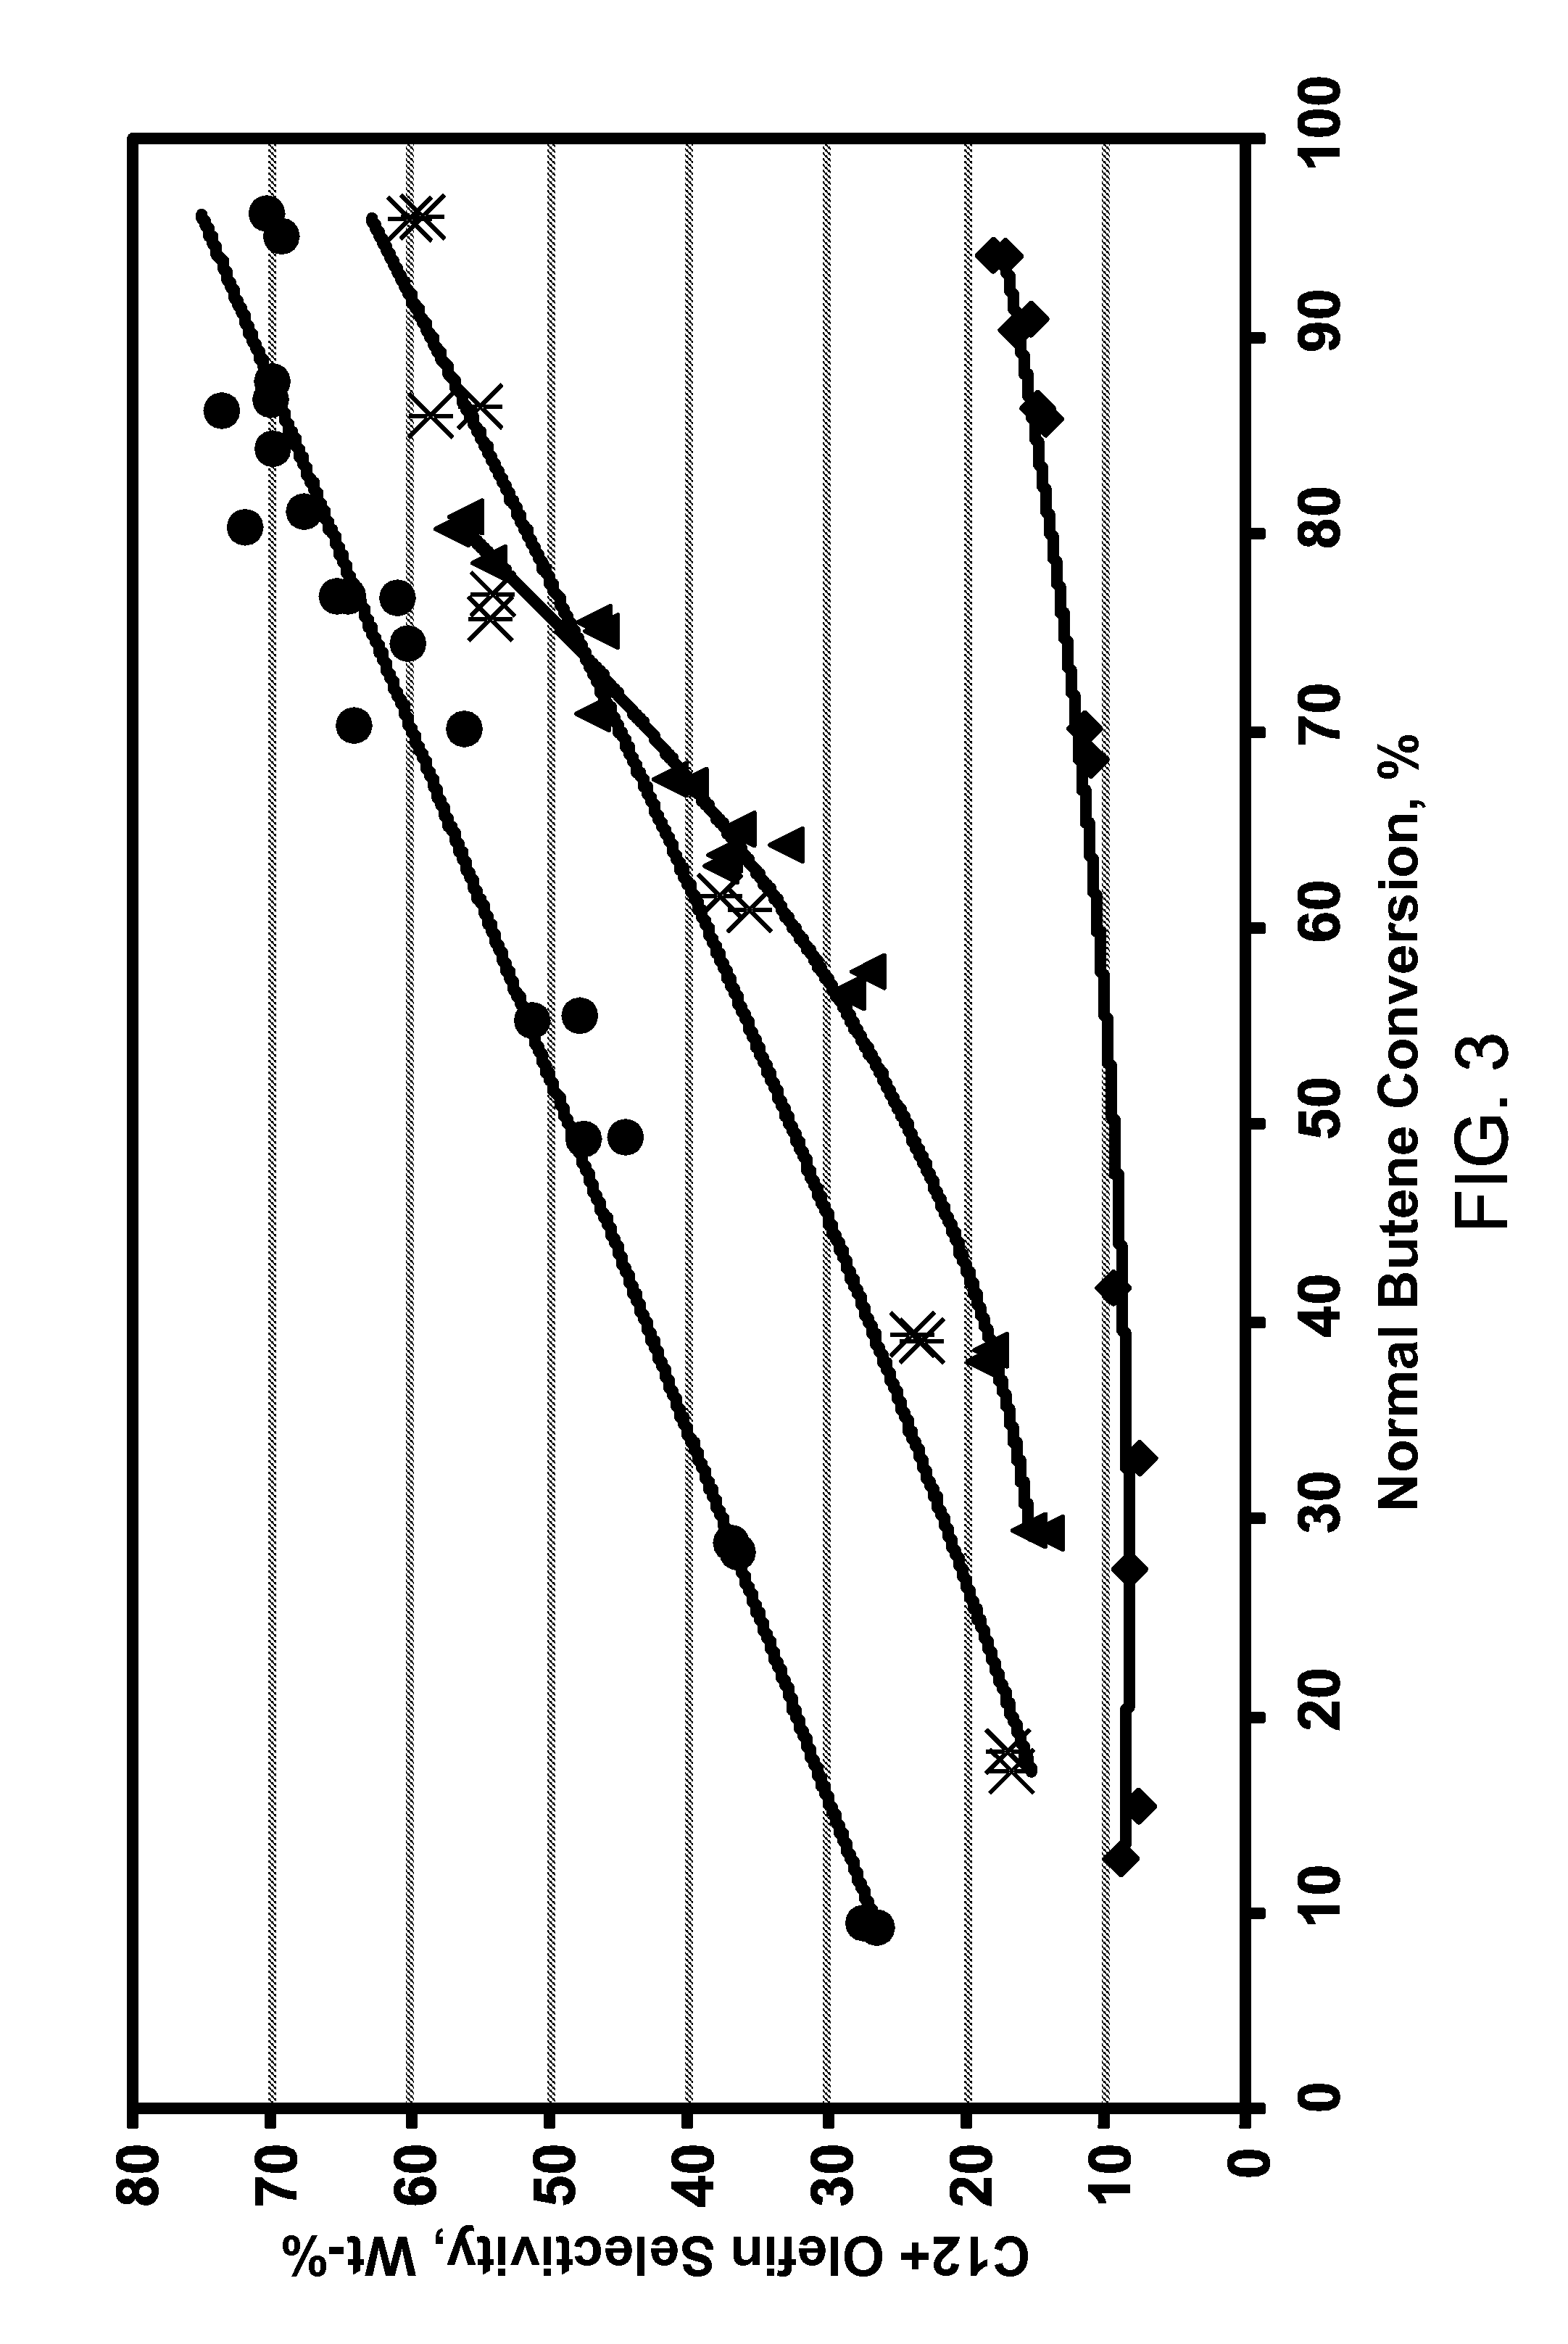 Process for oligomerizing gasoline with high yield